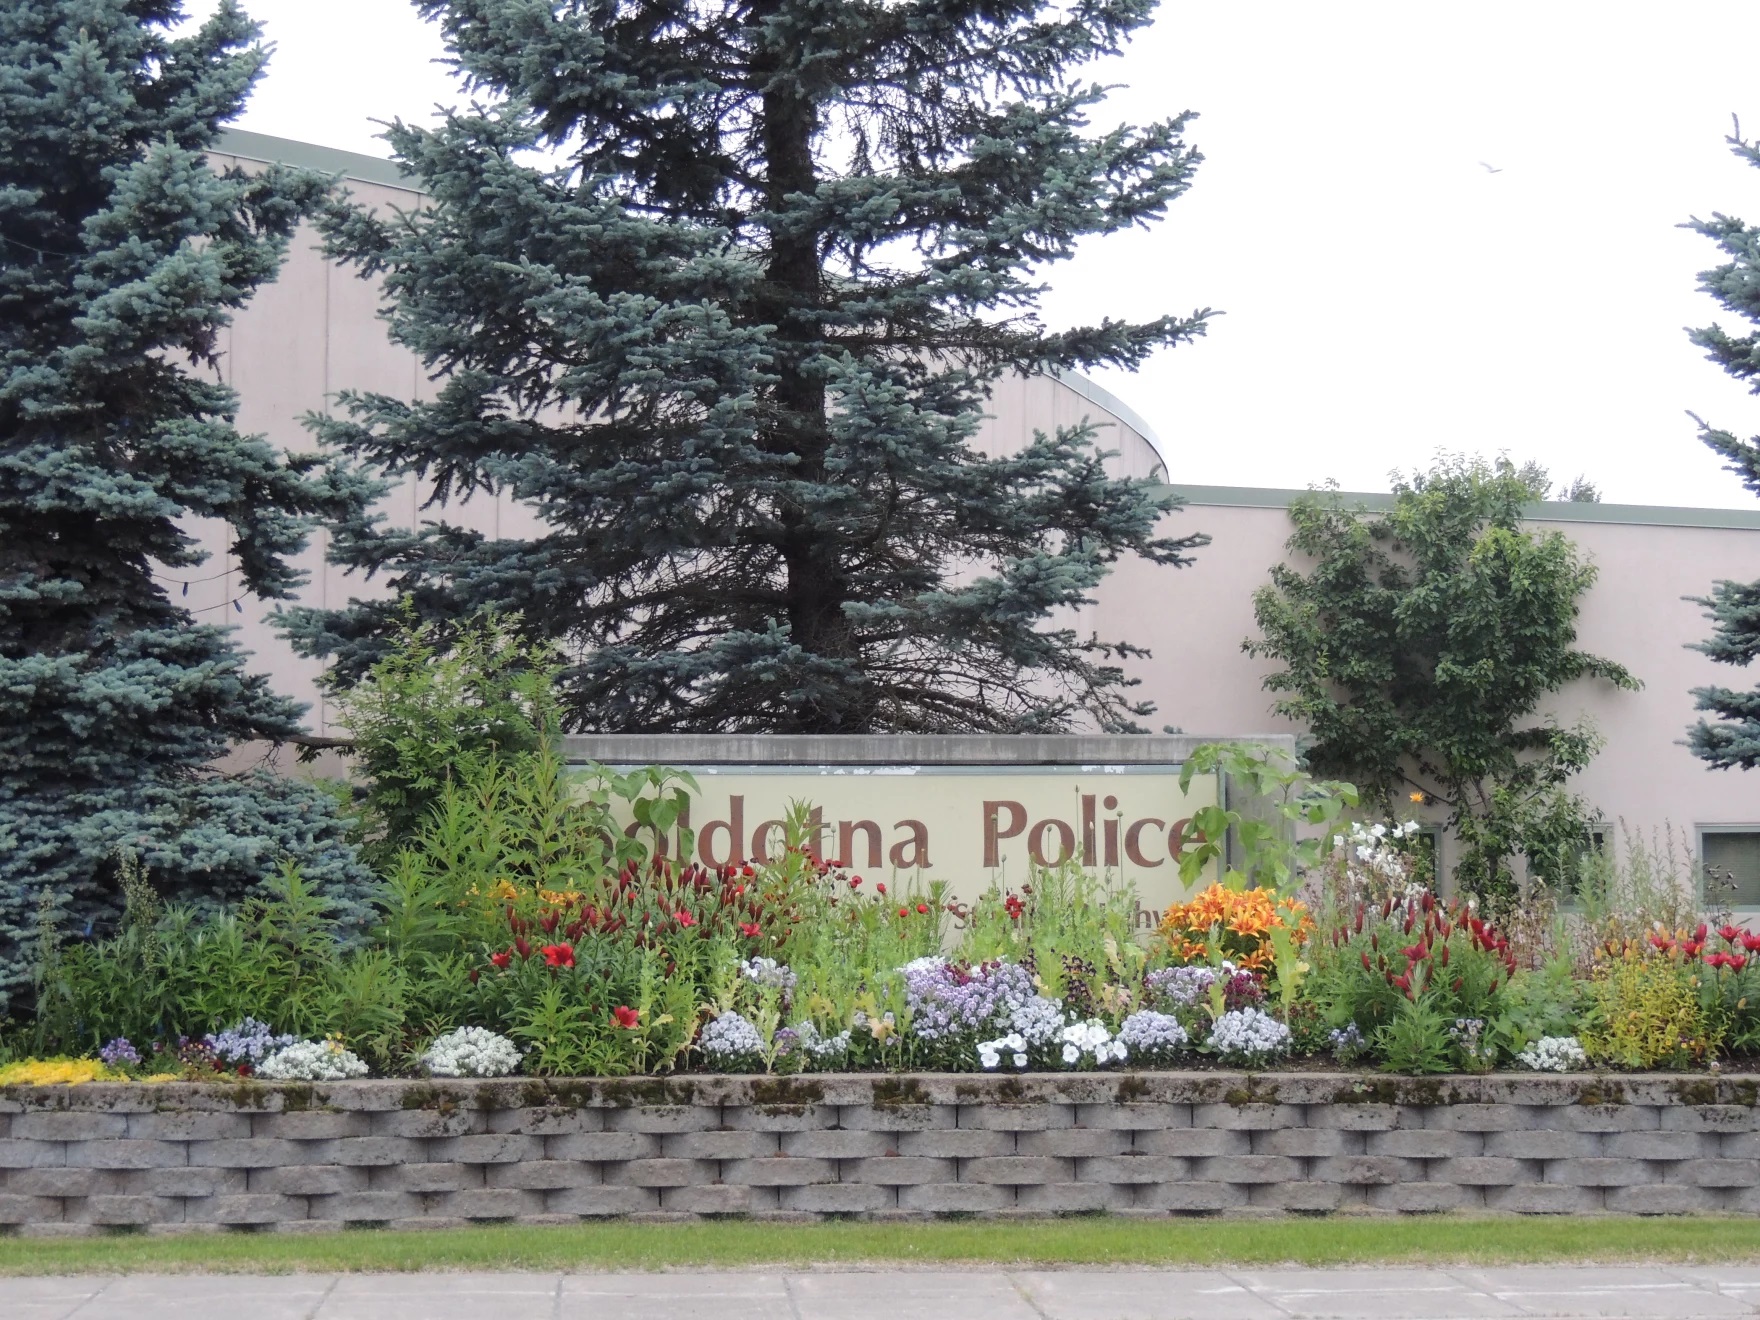 the Soldotna police department